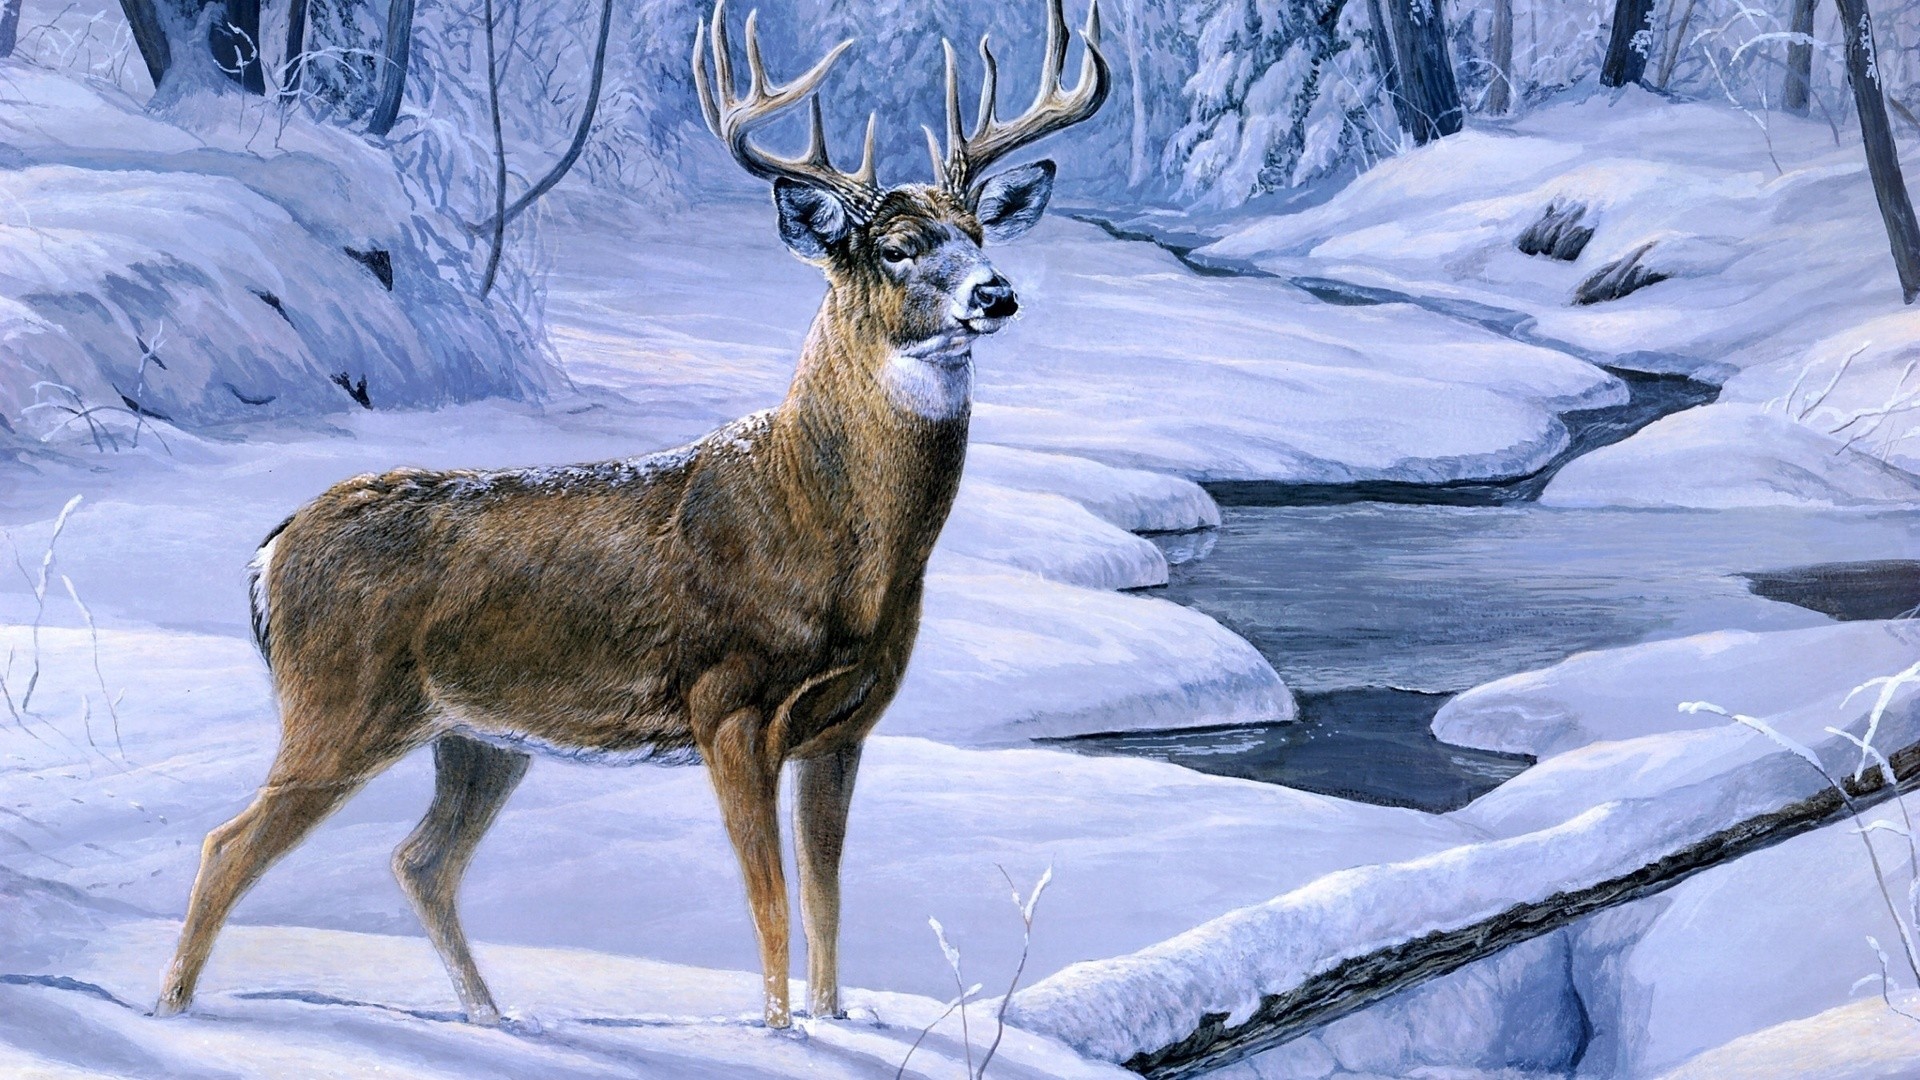 1920x1080 Cool Deer Wallpapers | HD Wallpapers | Pinterest | Deer wallpaper, Wallpaper  and Wallpaper backgrounds